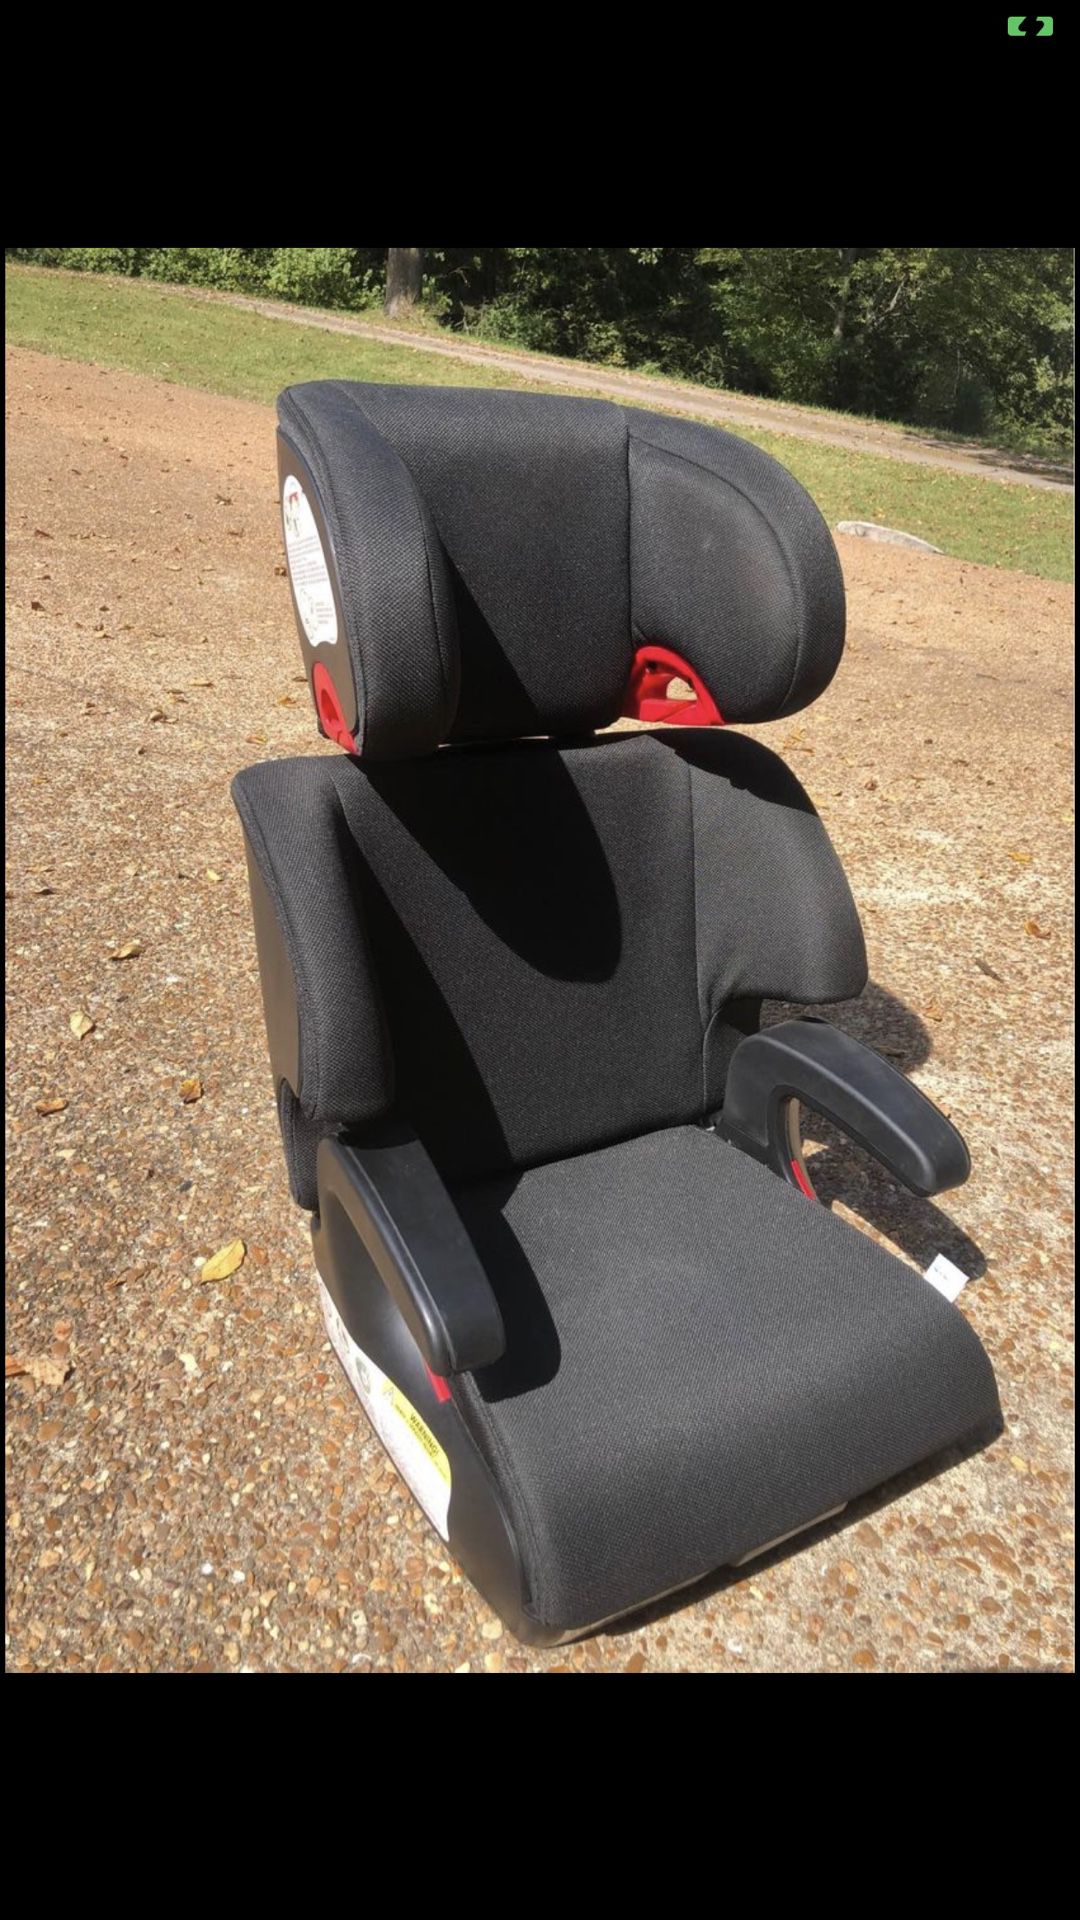 Clek (OOBR - Carbon) High Back Booster Seat